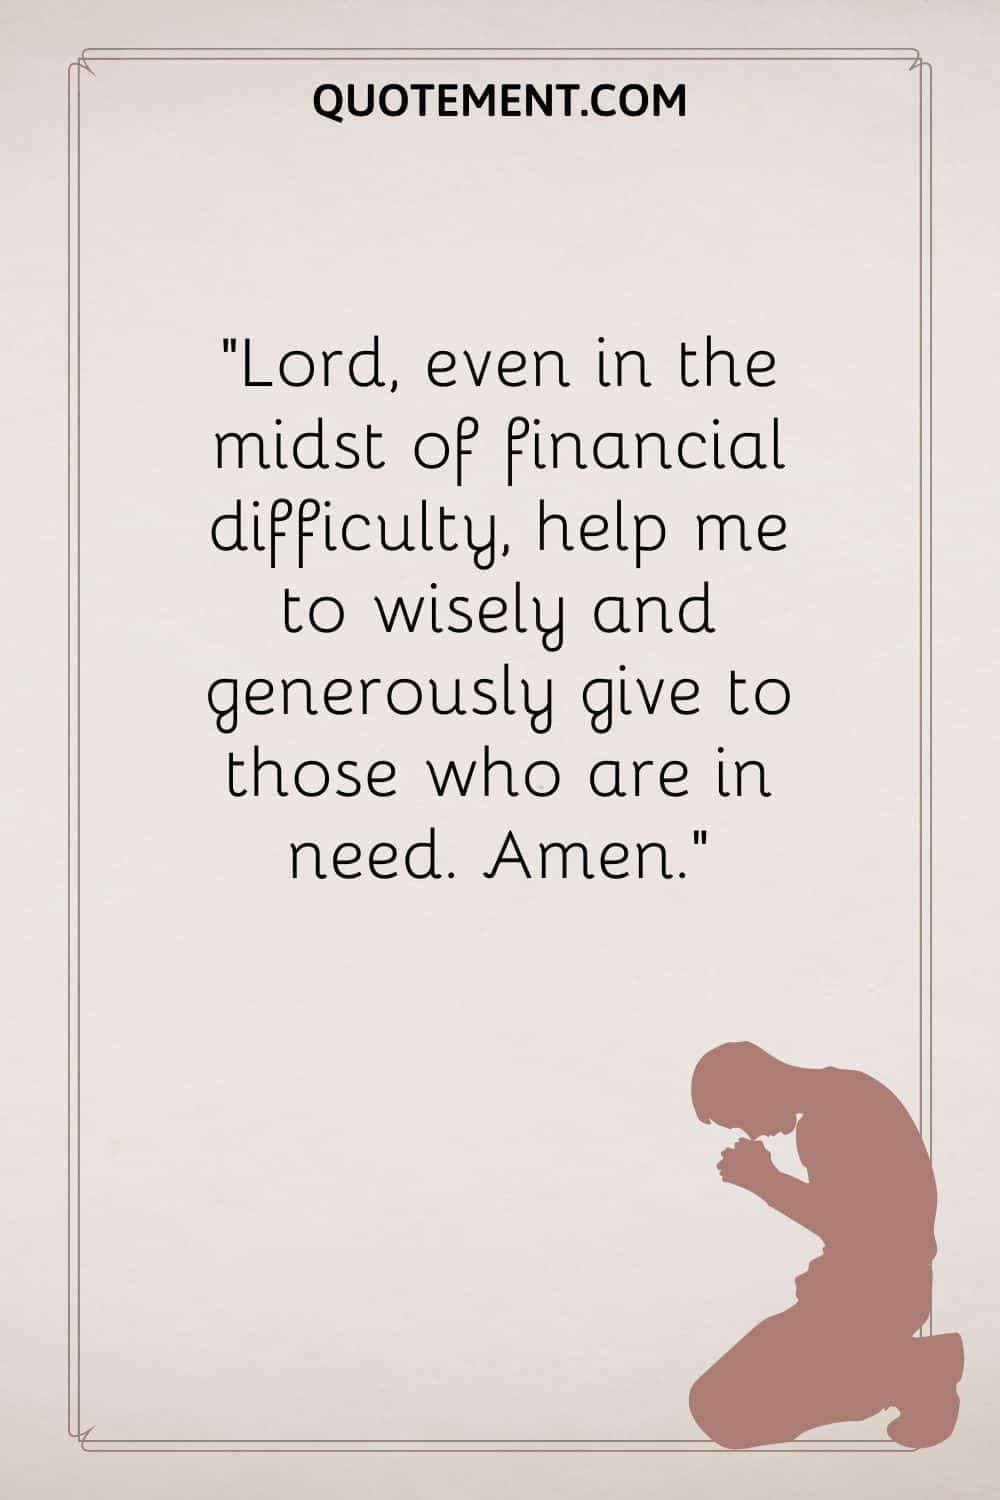 praying man image representing prayer for financial blessings